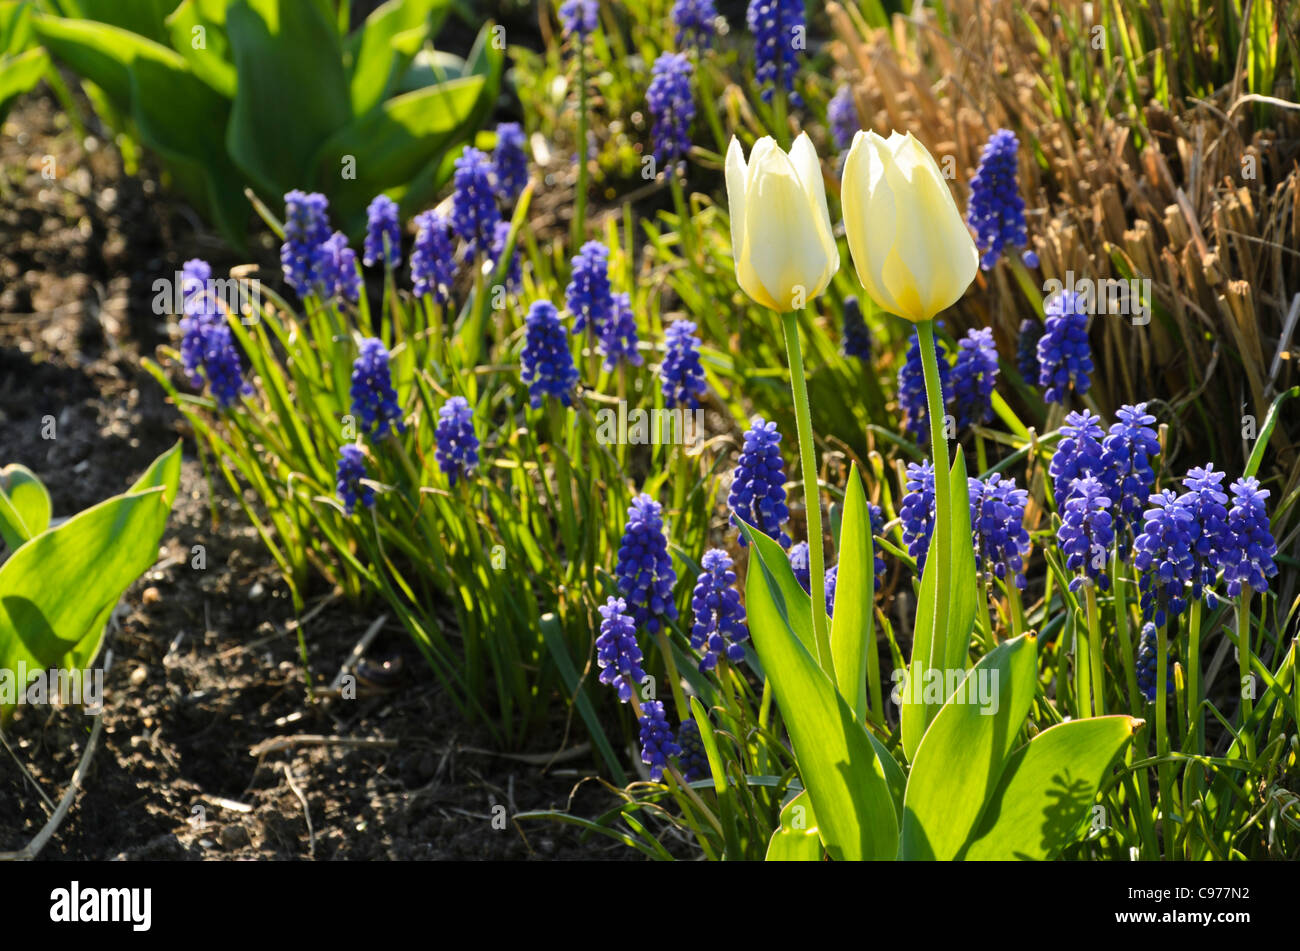 Tulips (Tulipa) and grape hyacinths (Muscari) Stock Photo